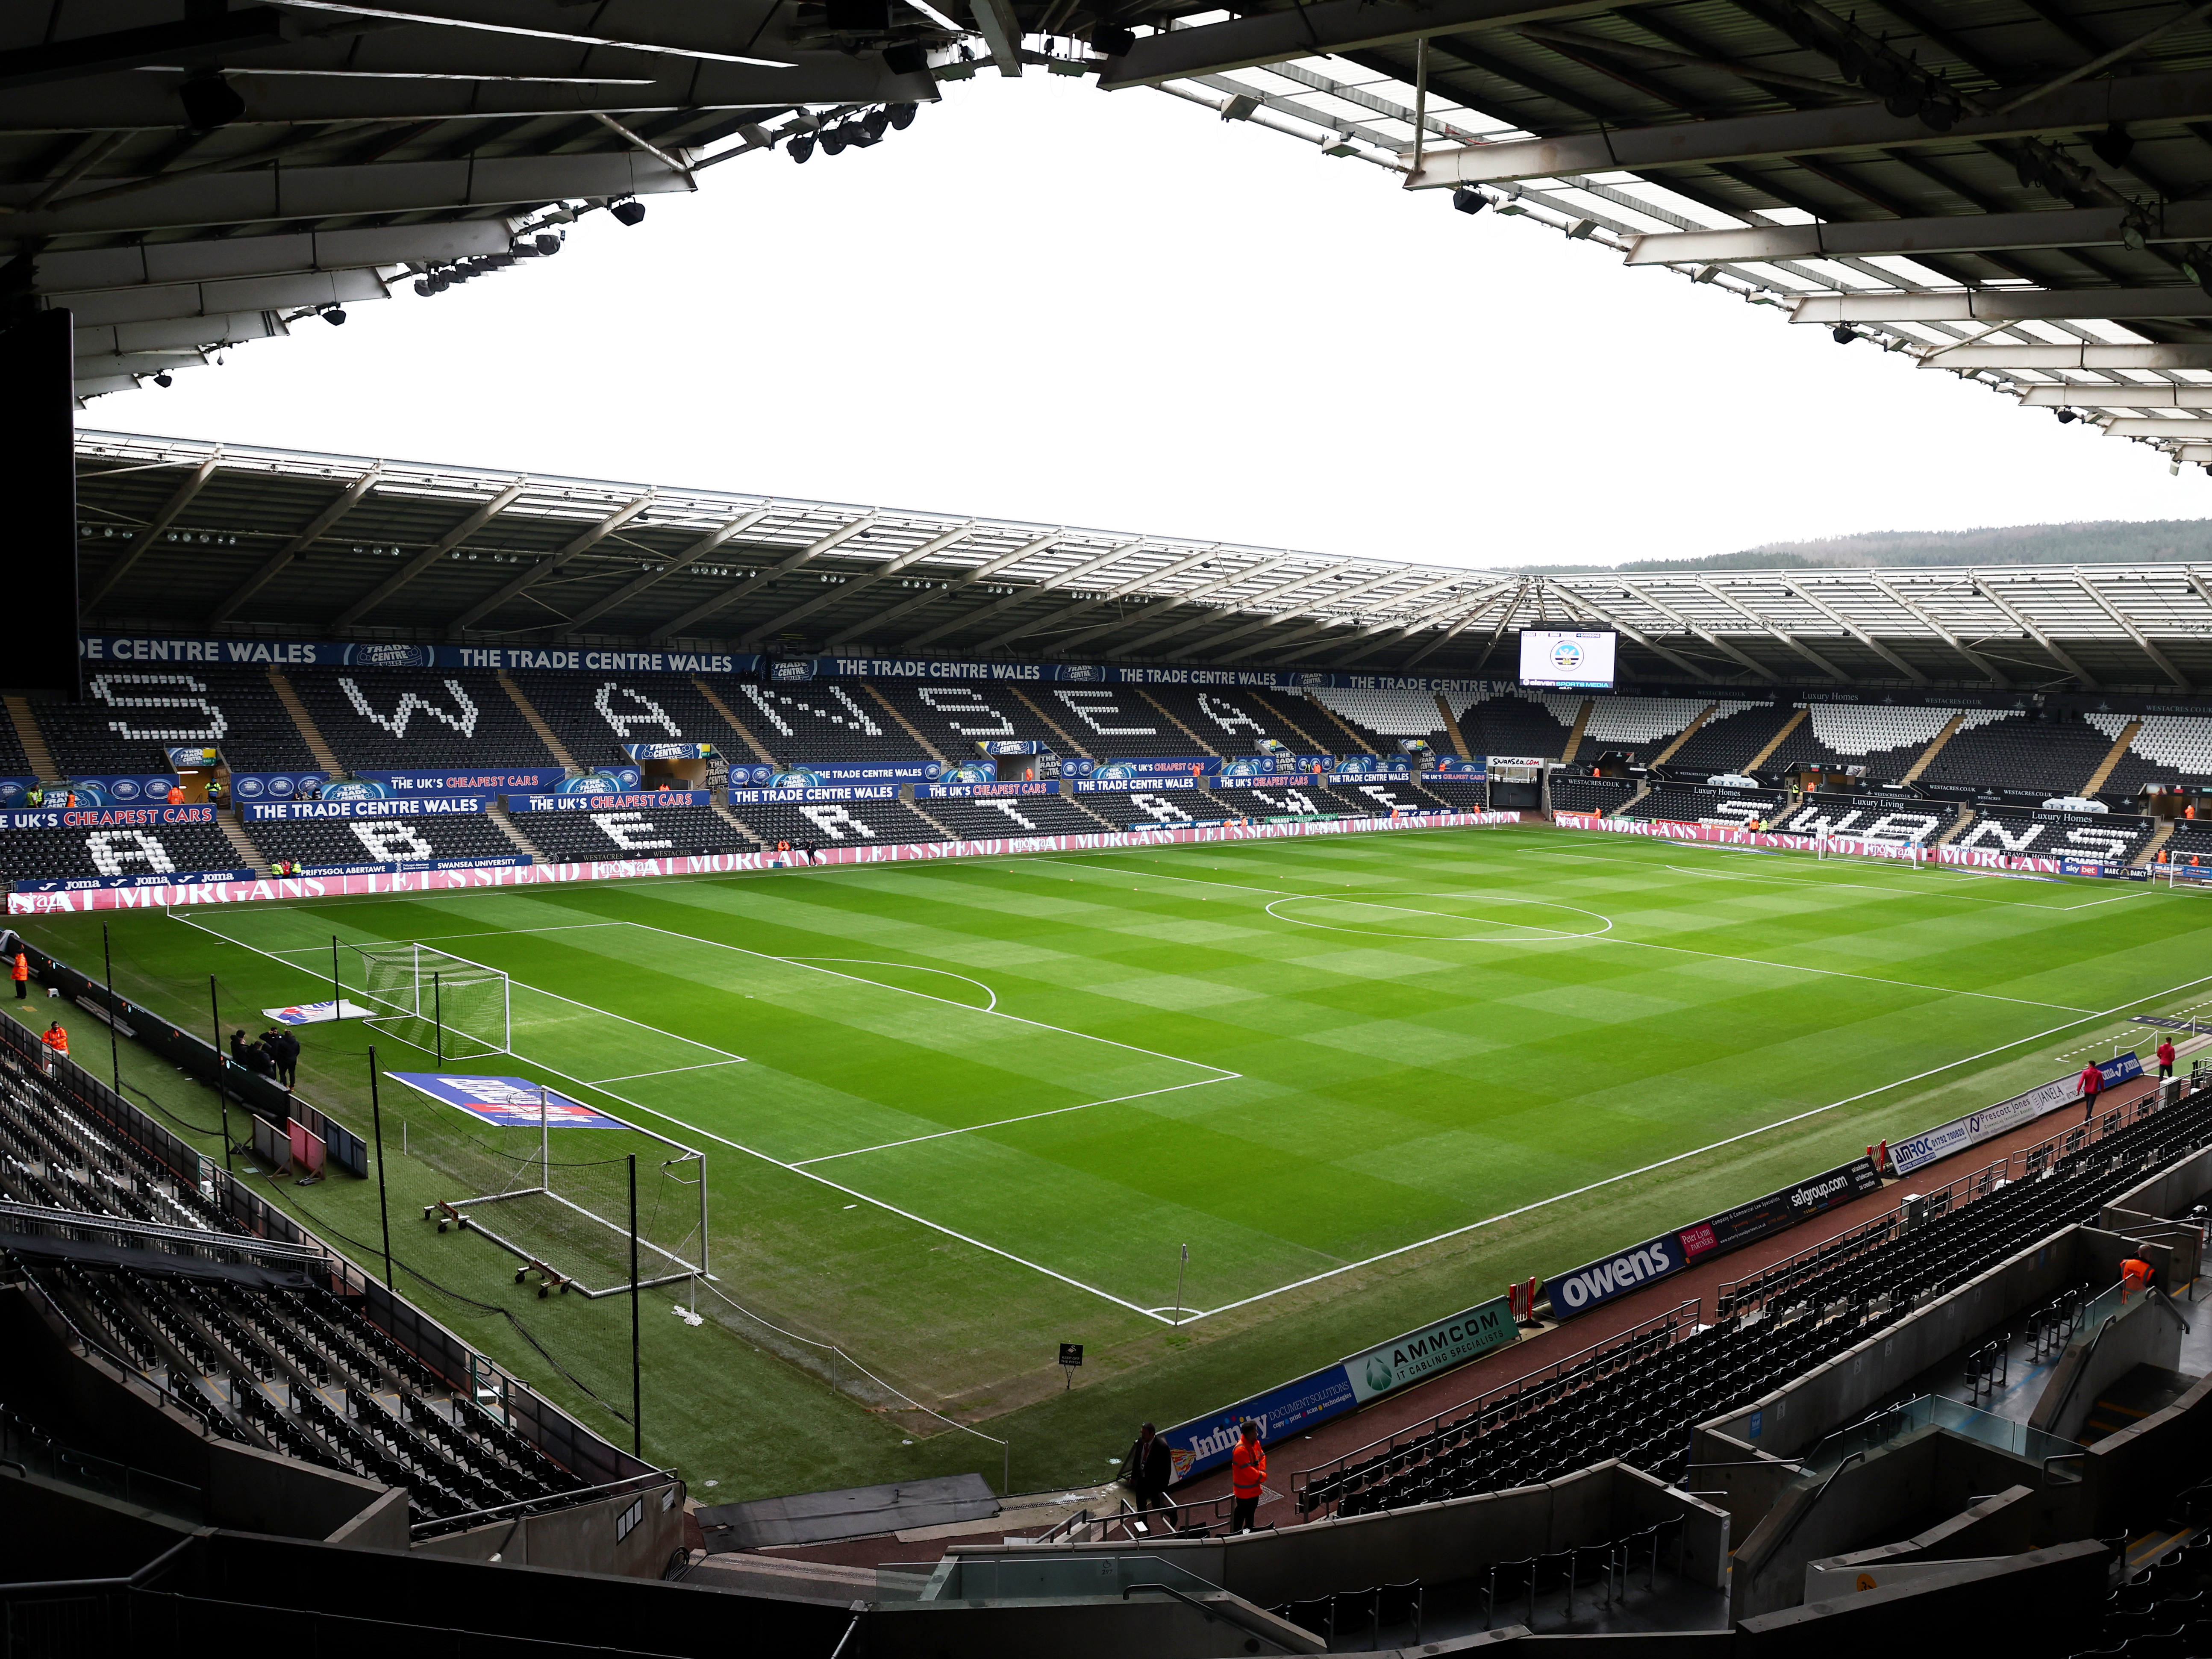 An image of the Swansea.com stadium